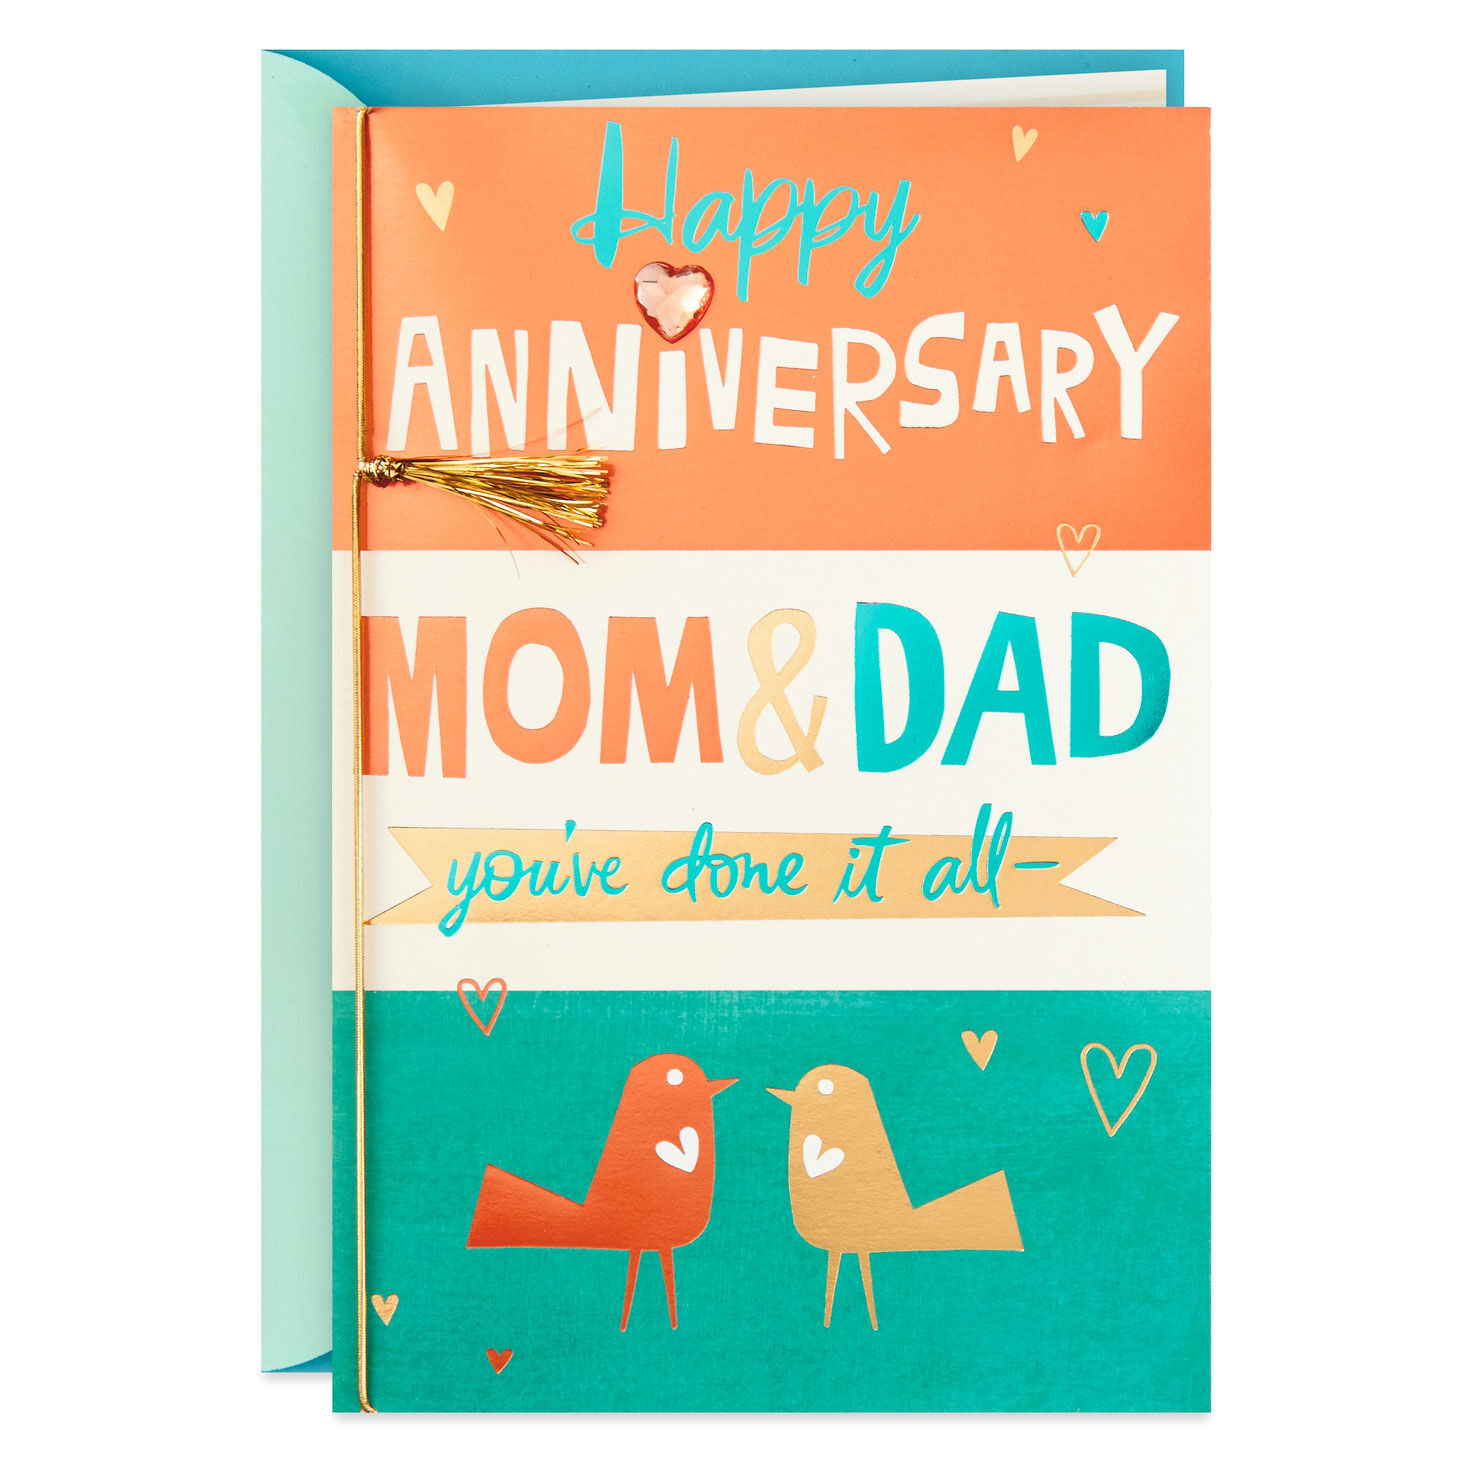 Old Model Medium Hallmark Mum and Dad Anniversary Card Loving Thoughts 